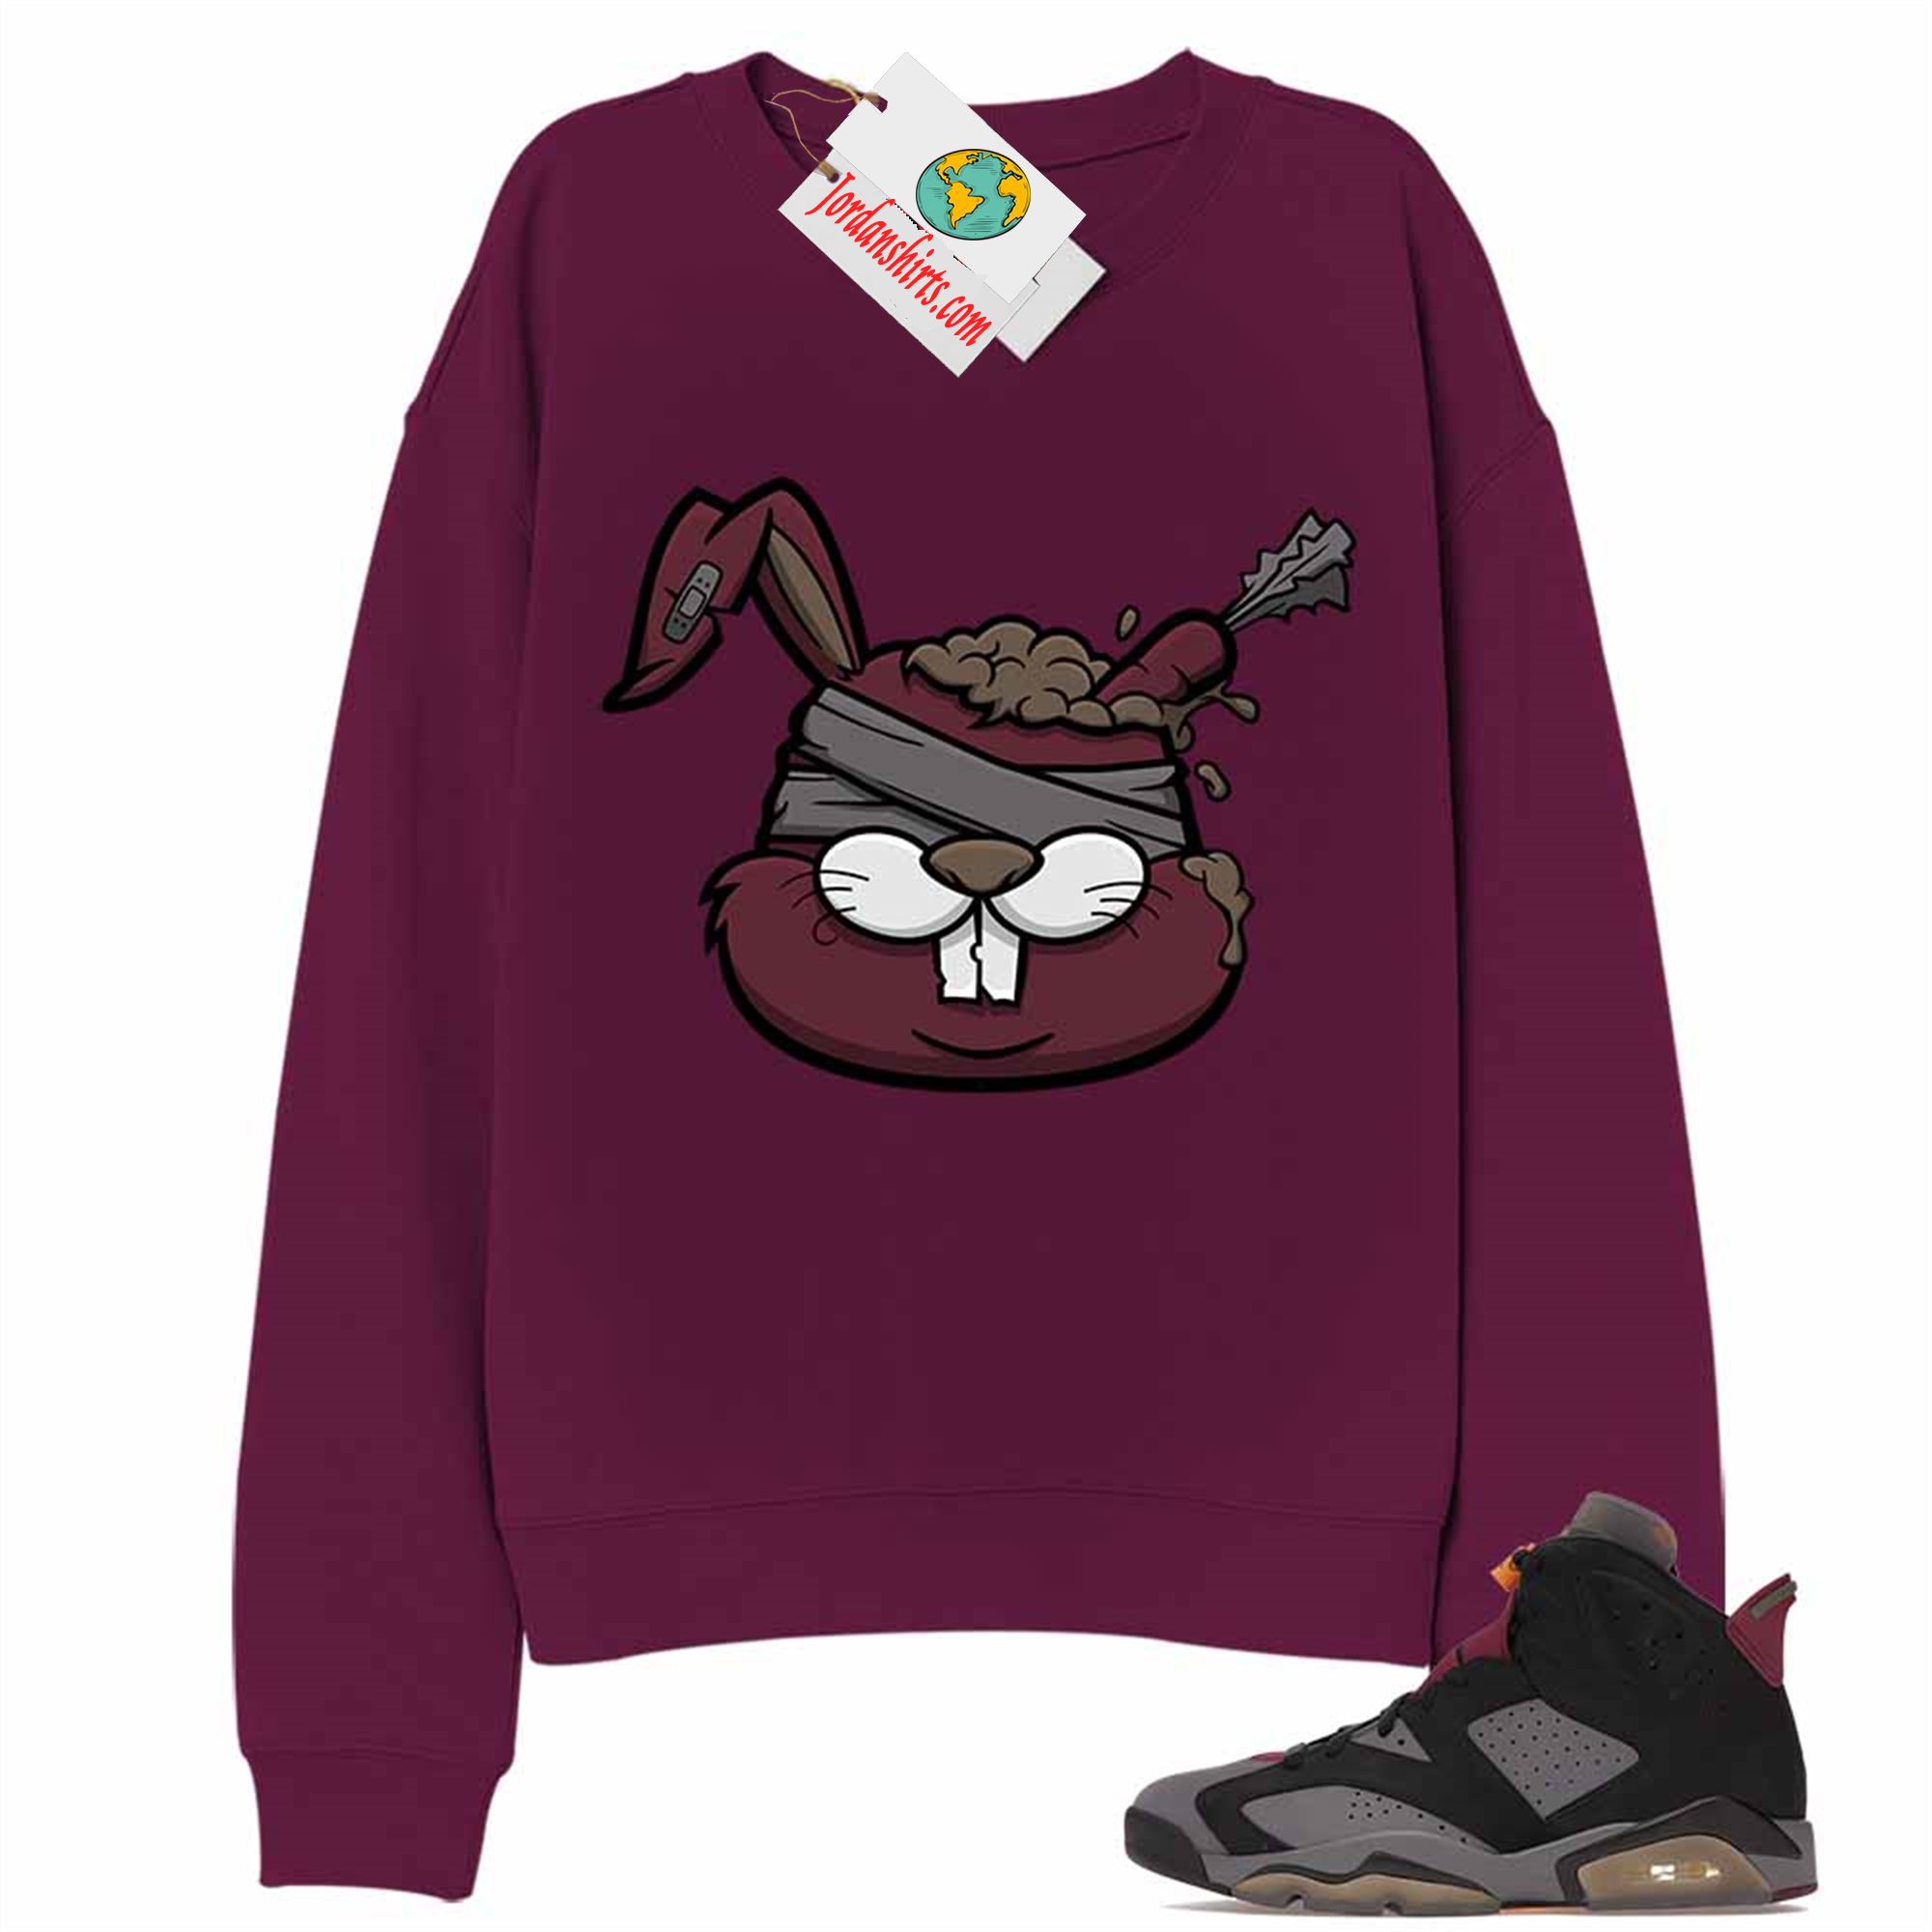 Jordan 6 Sweatshirt, Zombie Bunny Maroon Sweatshirt Air Jordan 6 Bordeaux 6s Plus Size Up To 5xl